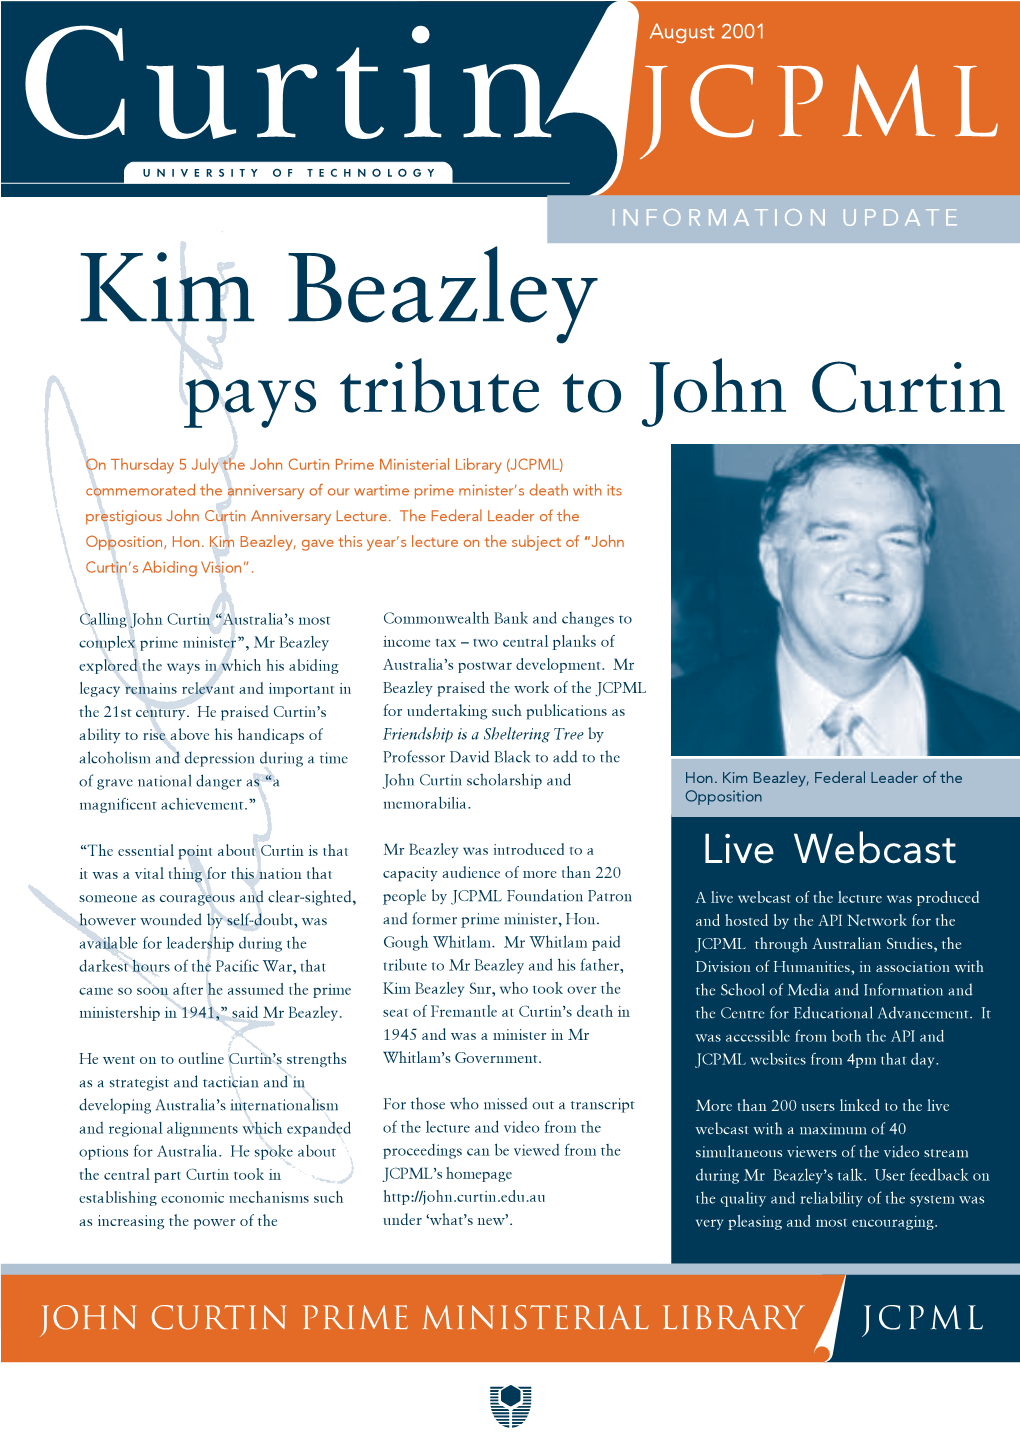 Kim Beazley Pays Tribute to John Curtin